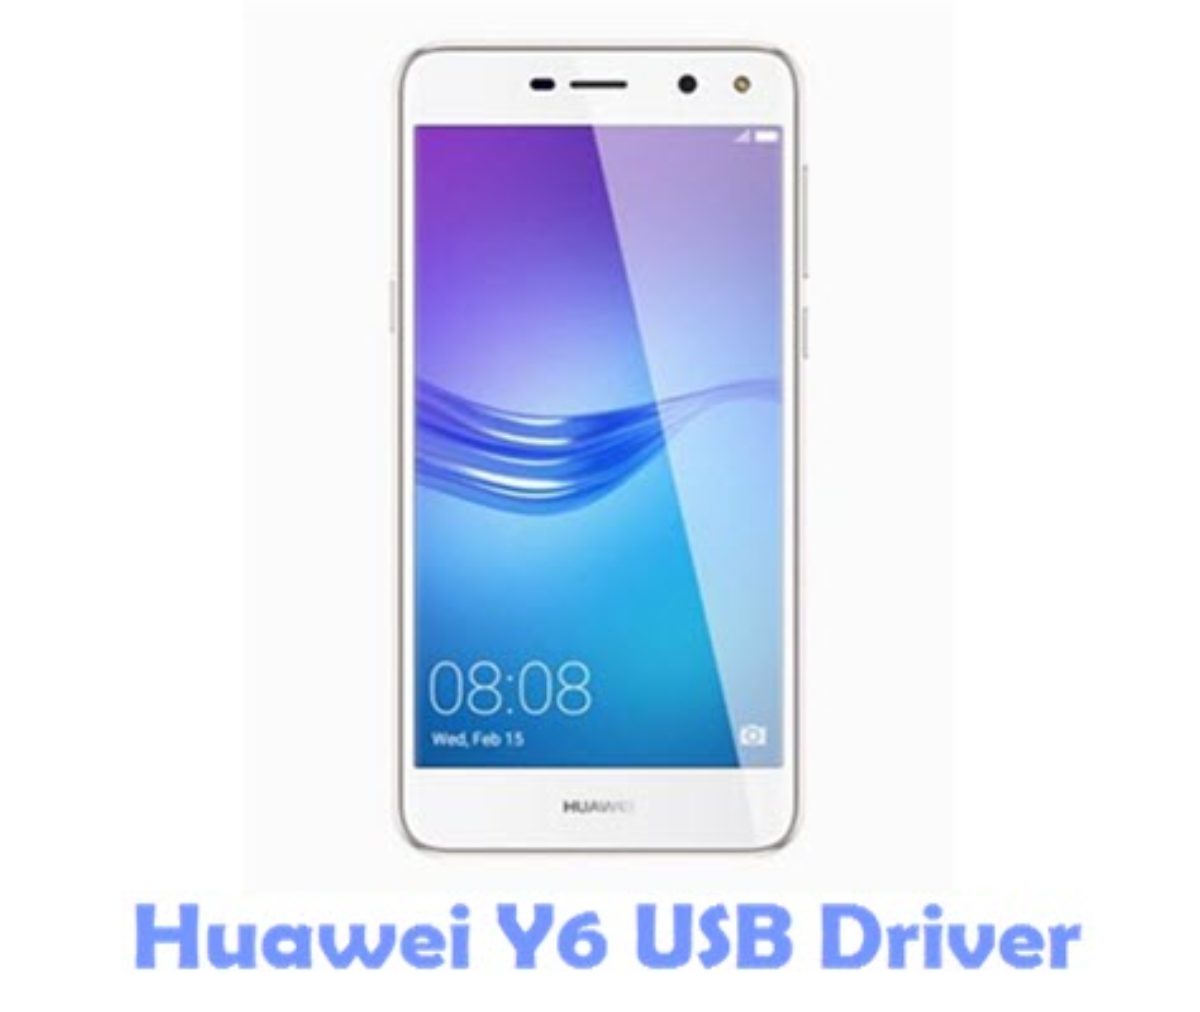 Zorunlu ittifak egemen  Download Huawei Y6 USB Driver | All USB Drivers